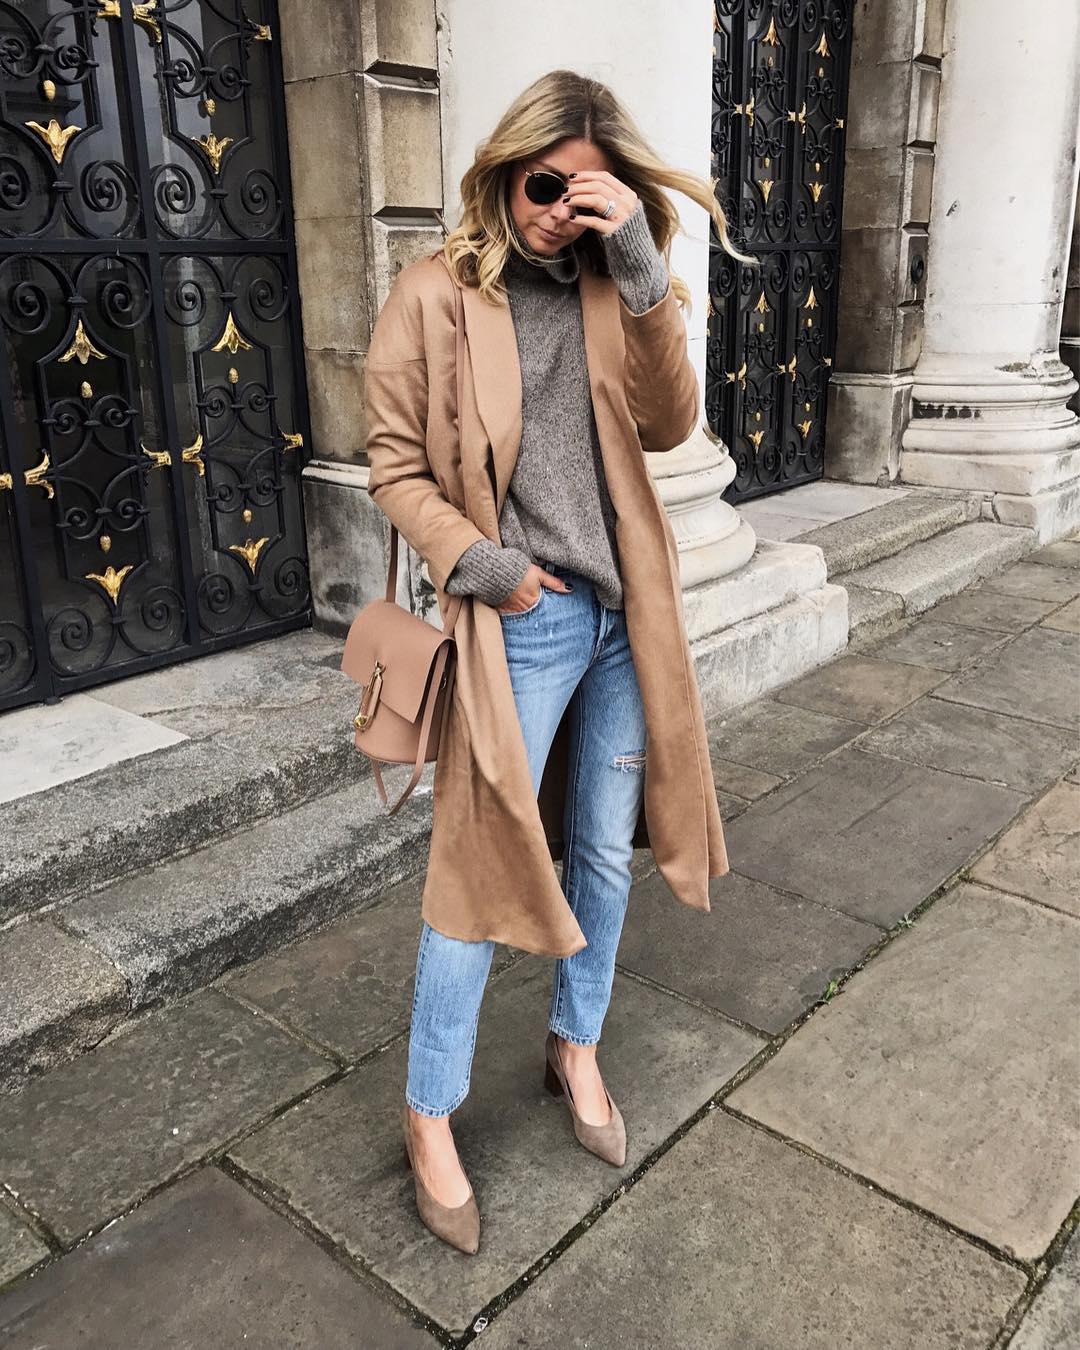 Blogger Style Inspiration No.16: Emma Hill, London, England